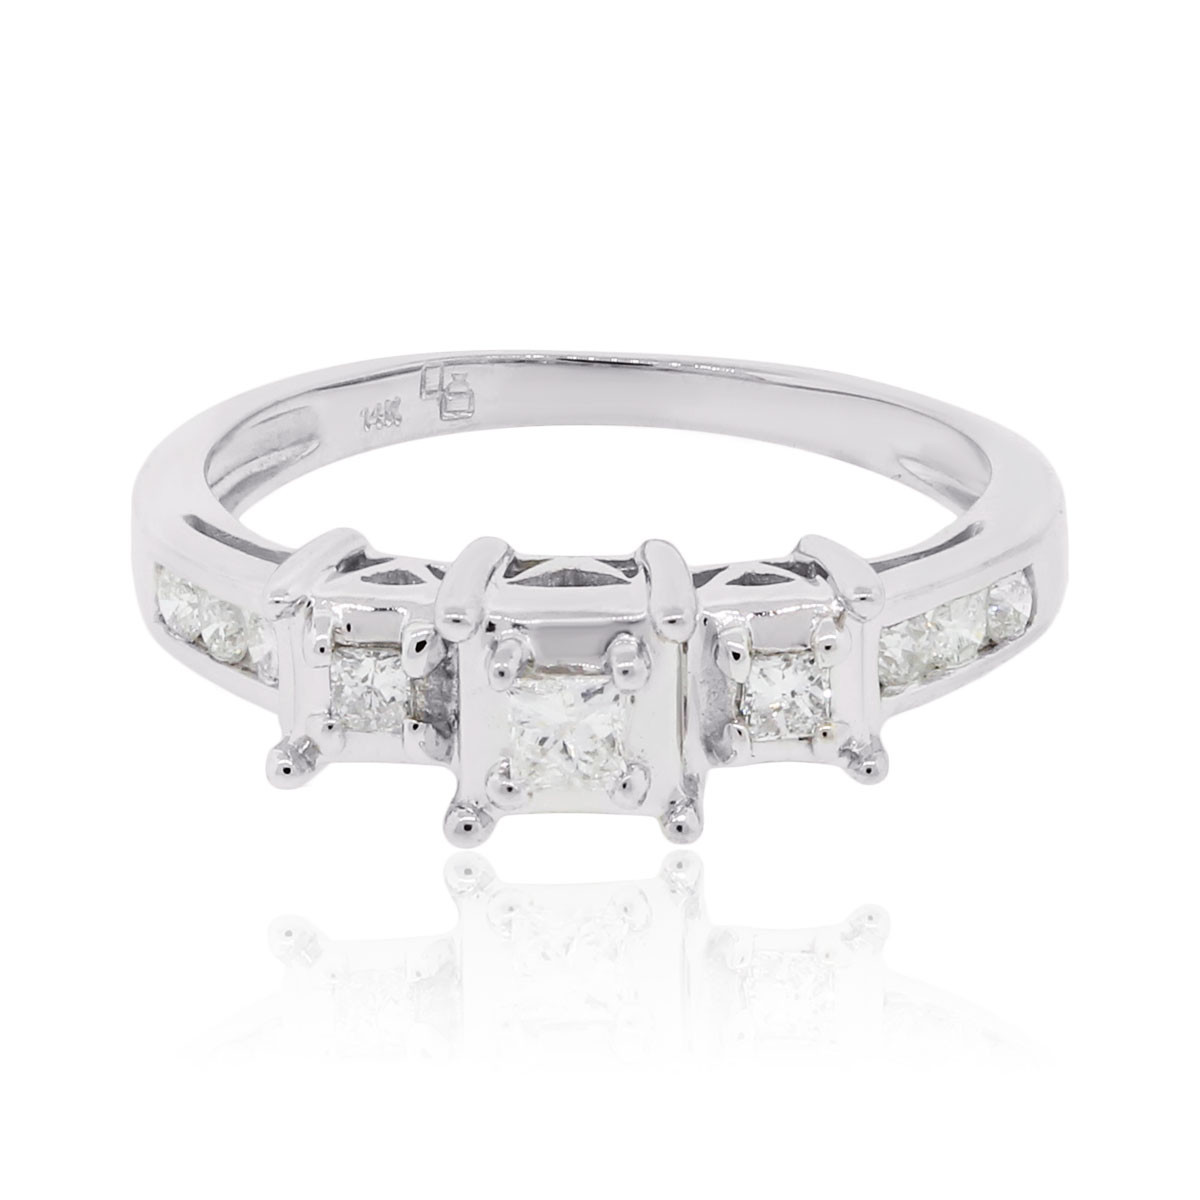 Princess Cut White Gold Engagement Ring
 14k White Gold 0 30ctw Princess Cut Diamond Engagement Ring